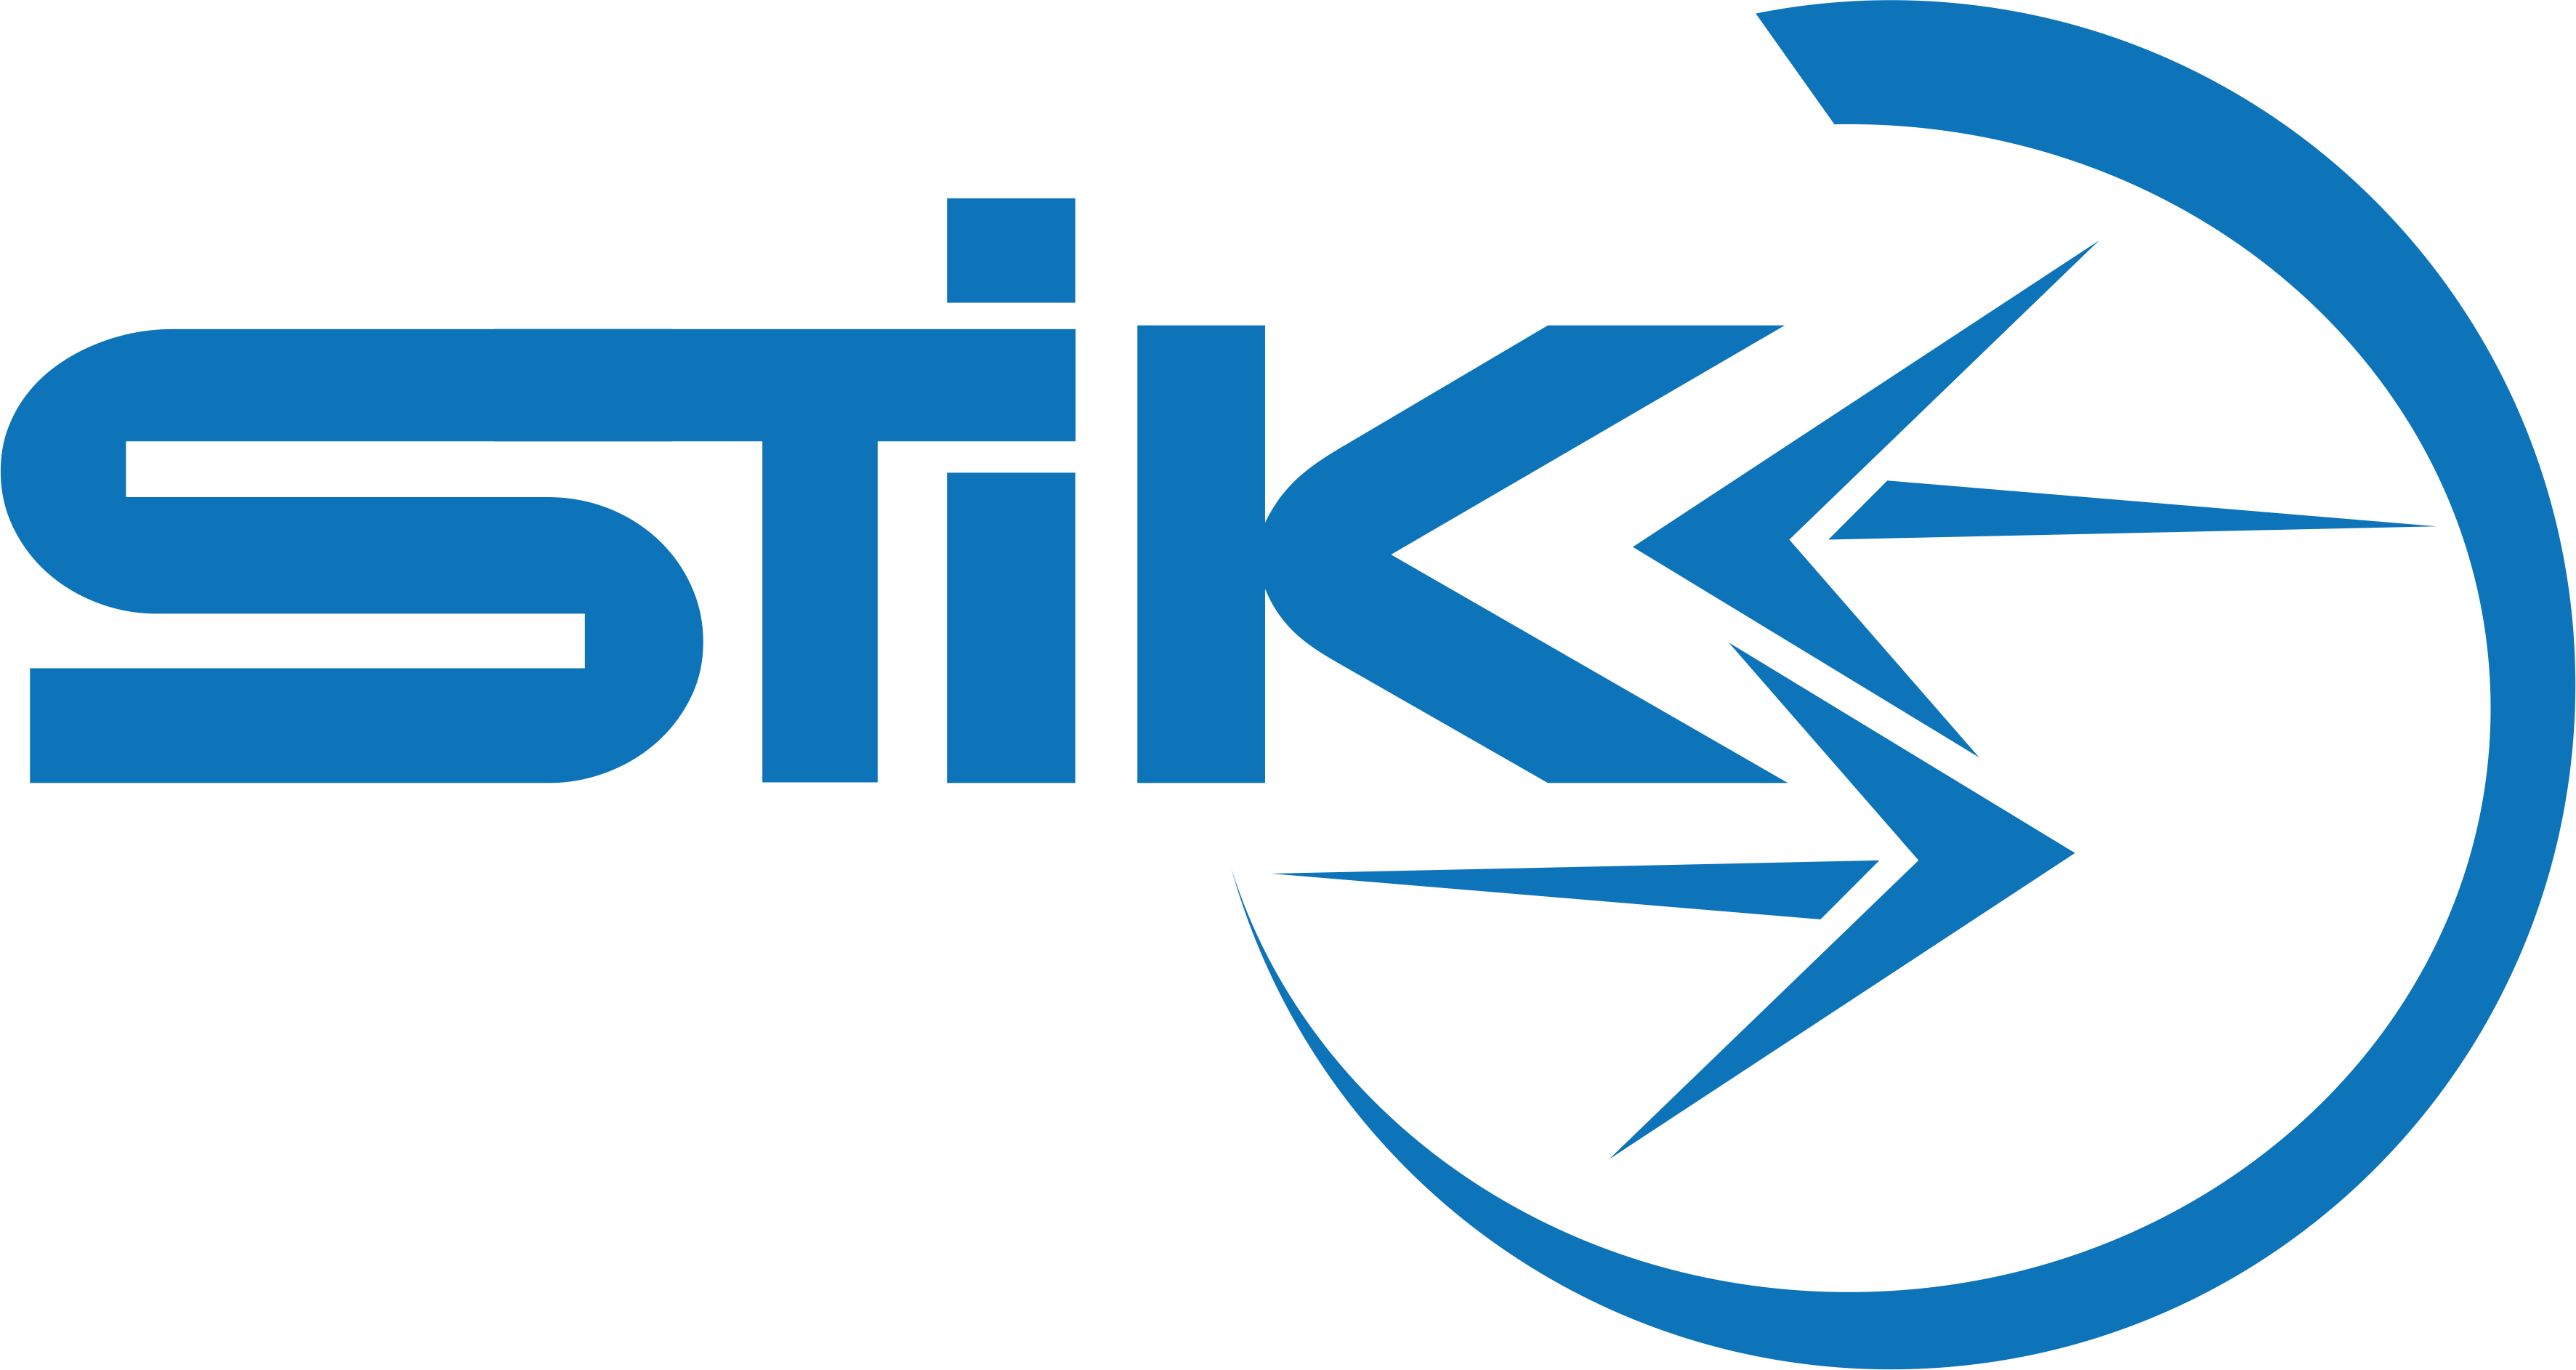 STIK - производство и продажа экипировки для занятий спортом